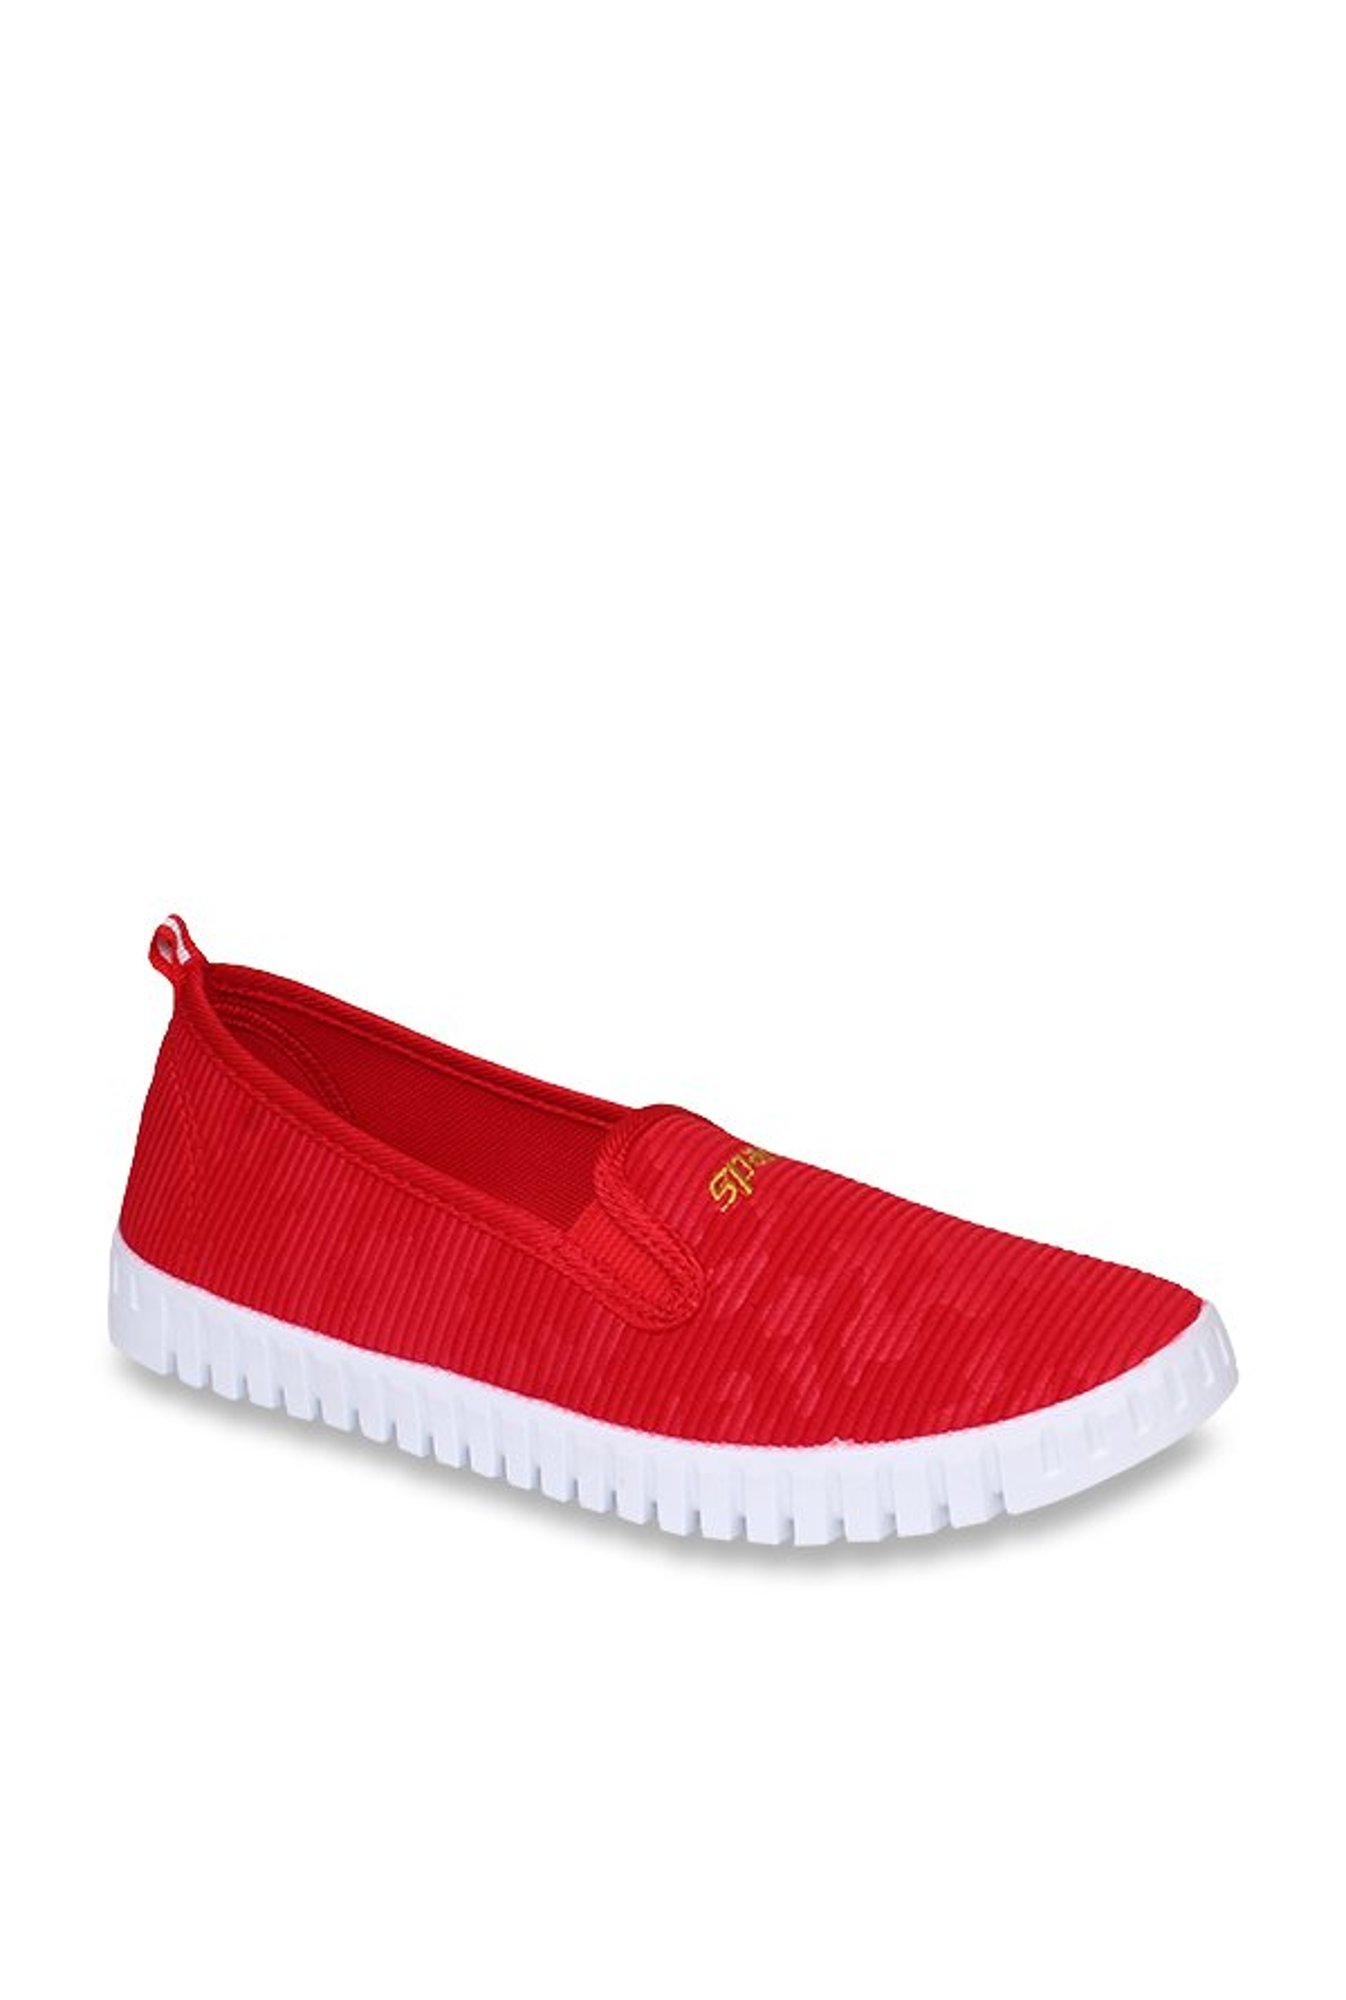 sparx red colour shoes